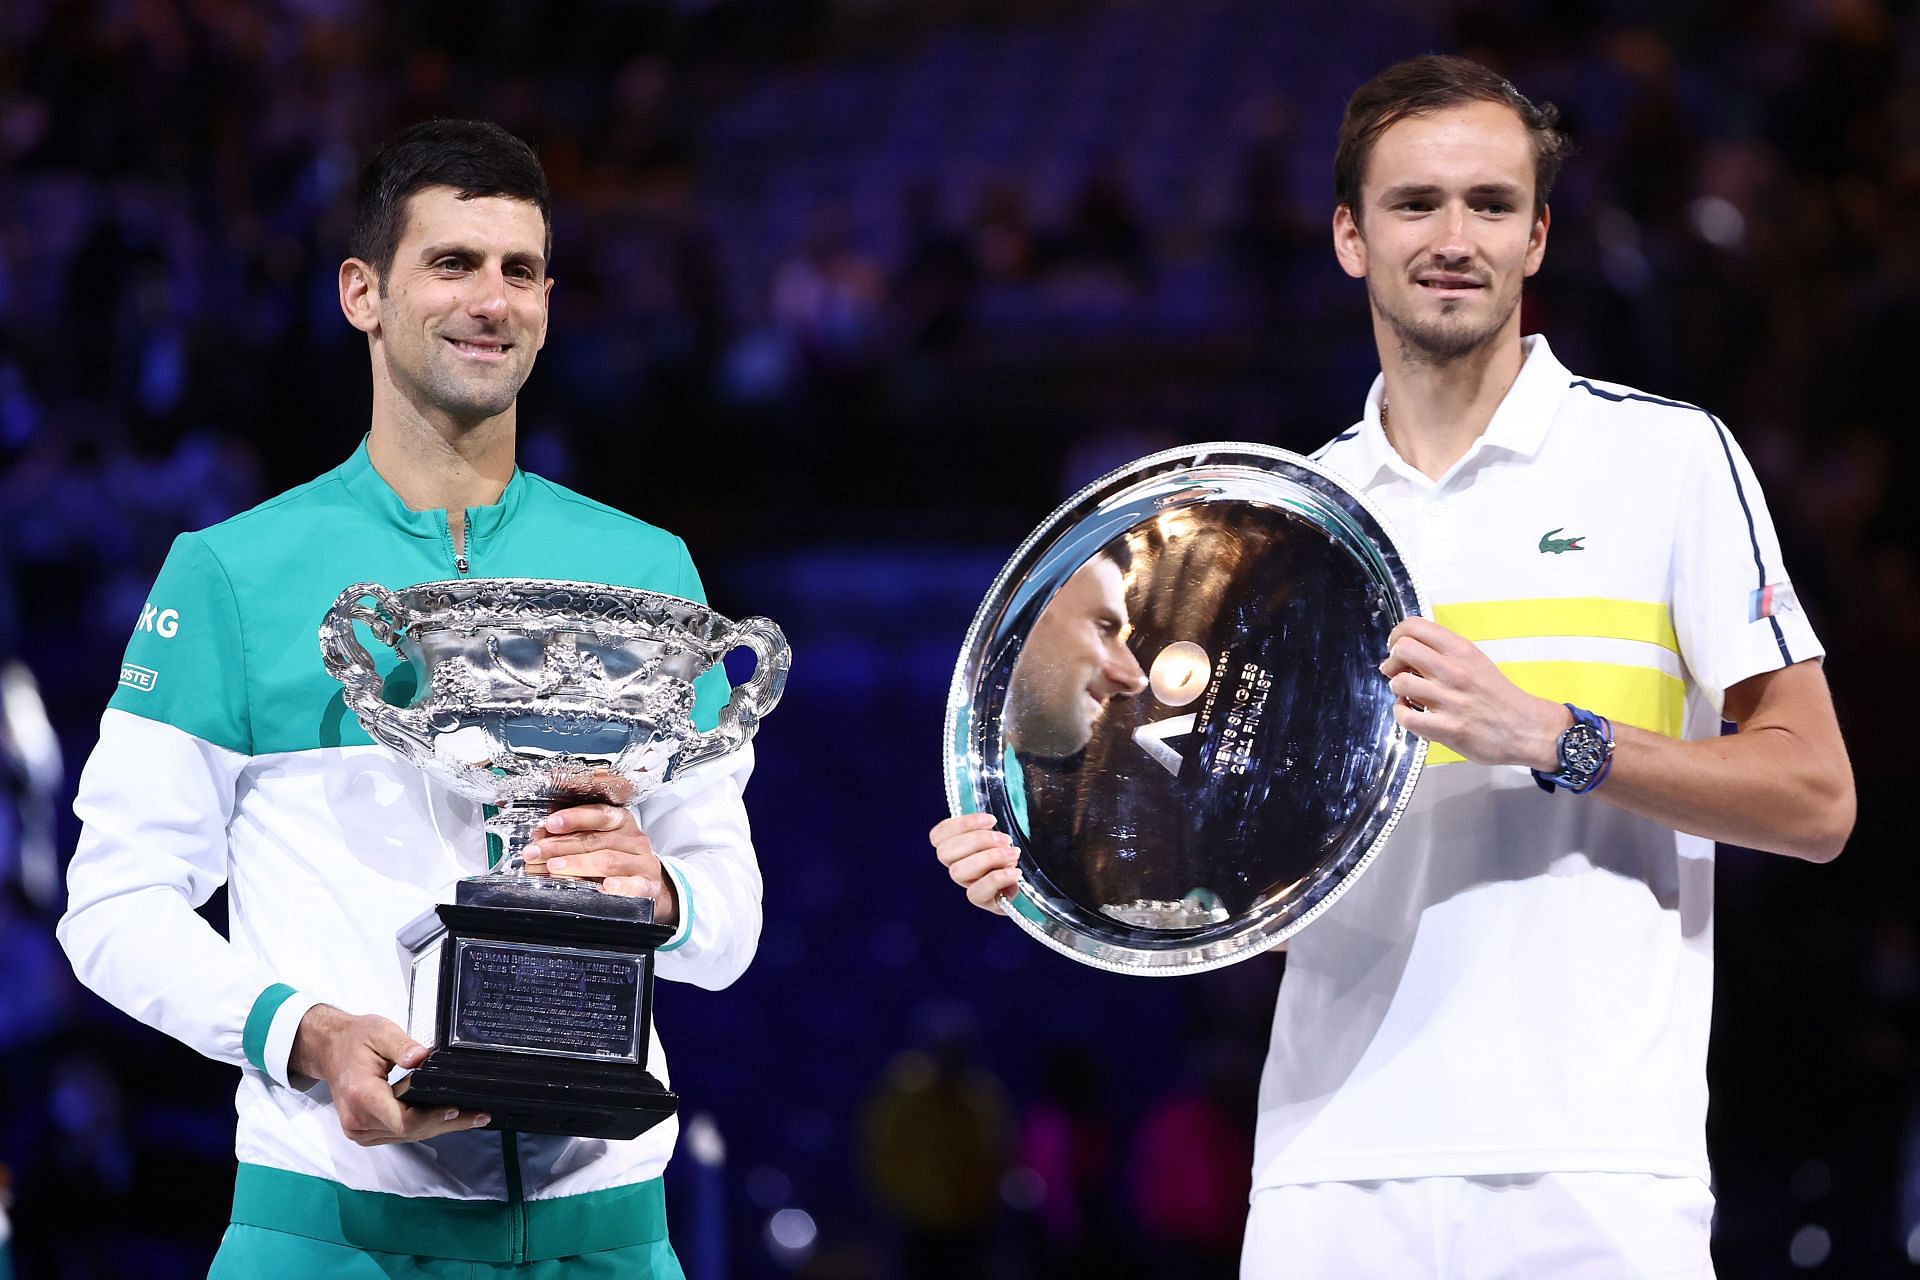 Novak Djokovic vs Daniil Medvedev Where to watch, TV schedule, live streaming details and more 2022 ATP Finals